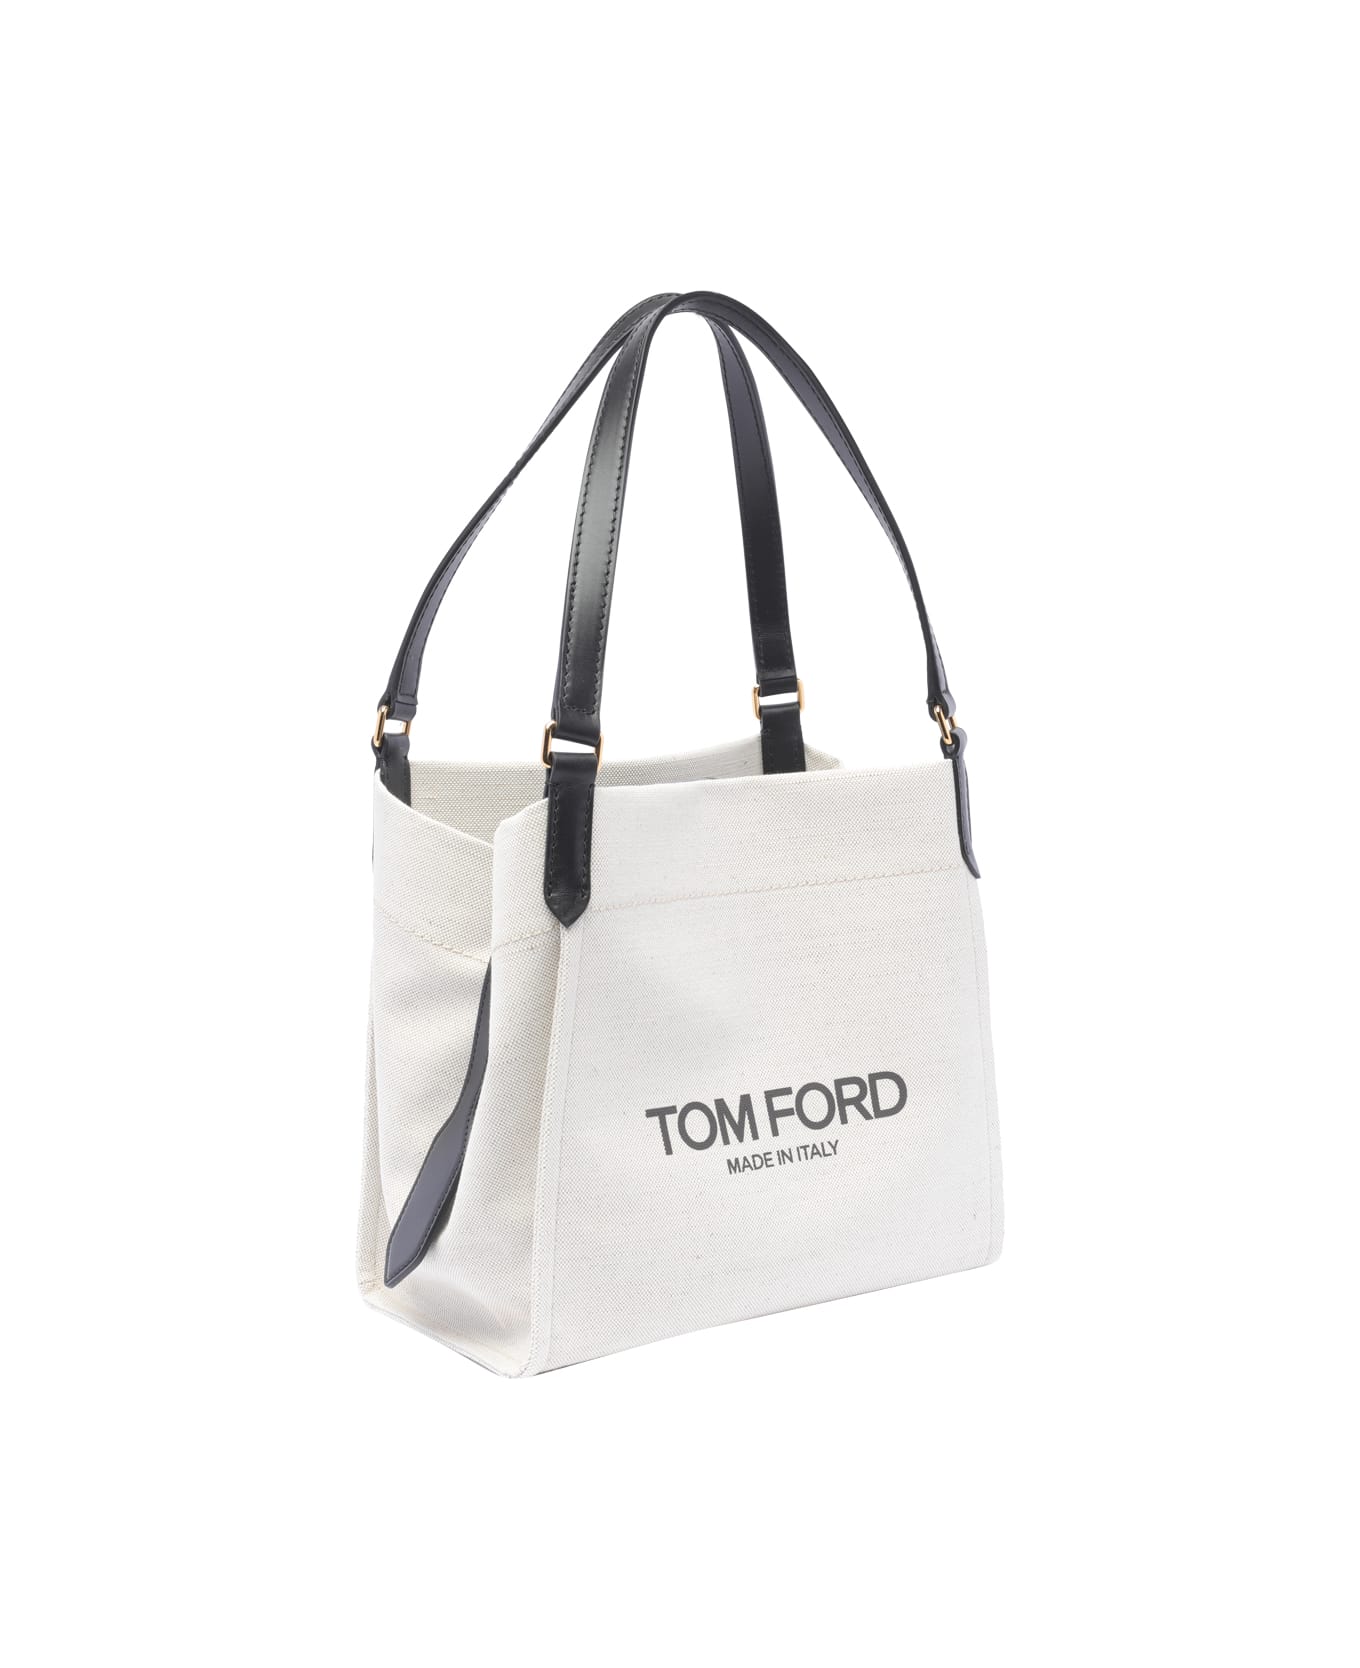 Tom Ford Tote Bag - WHITE